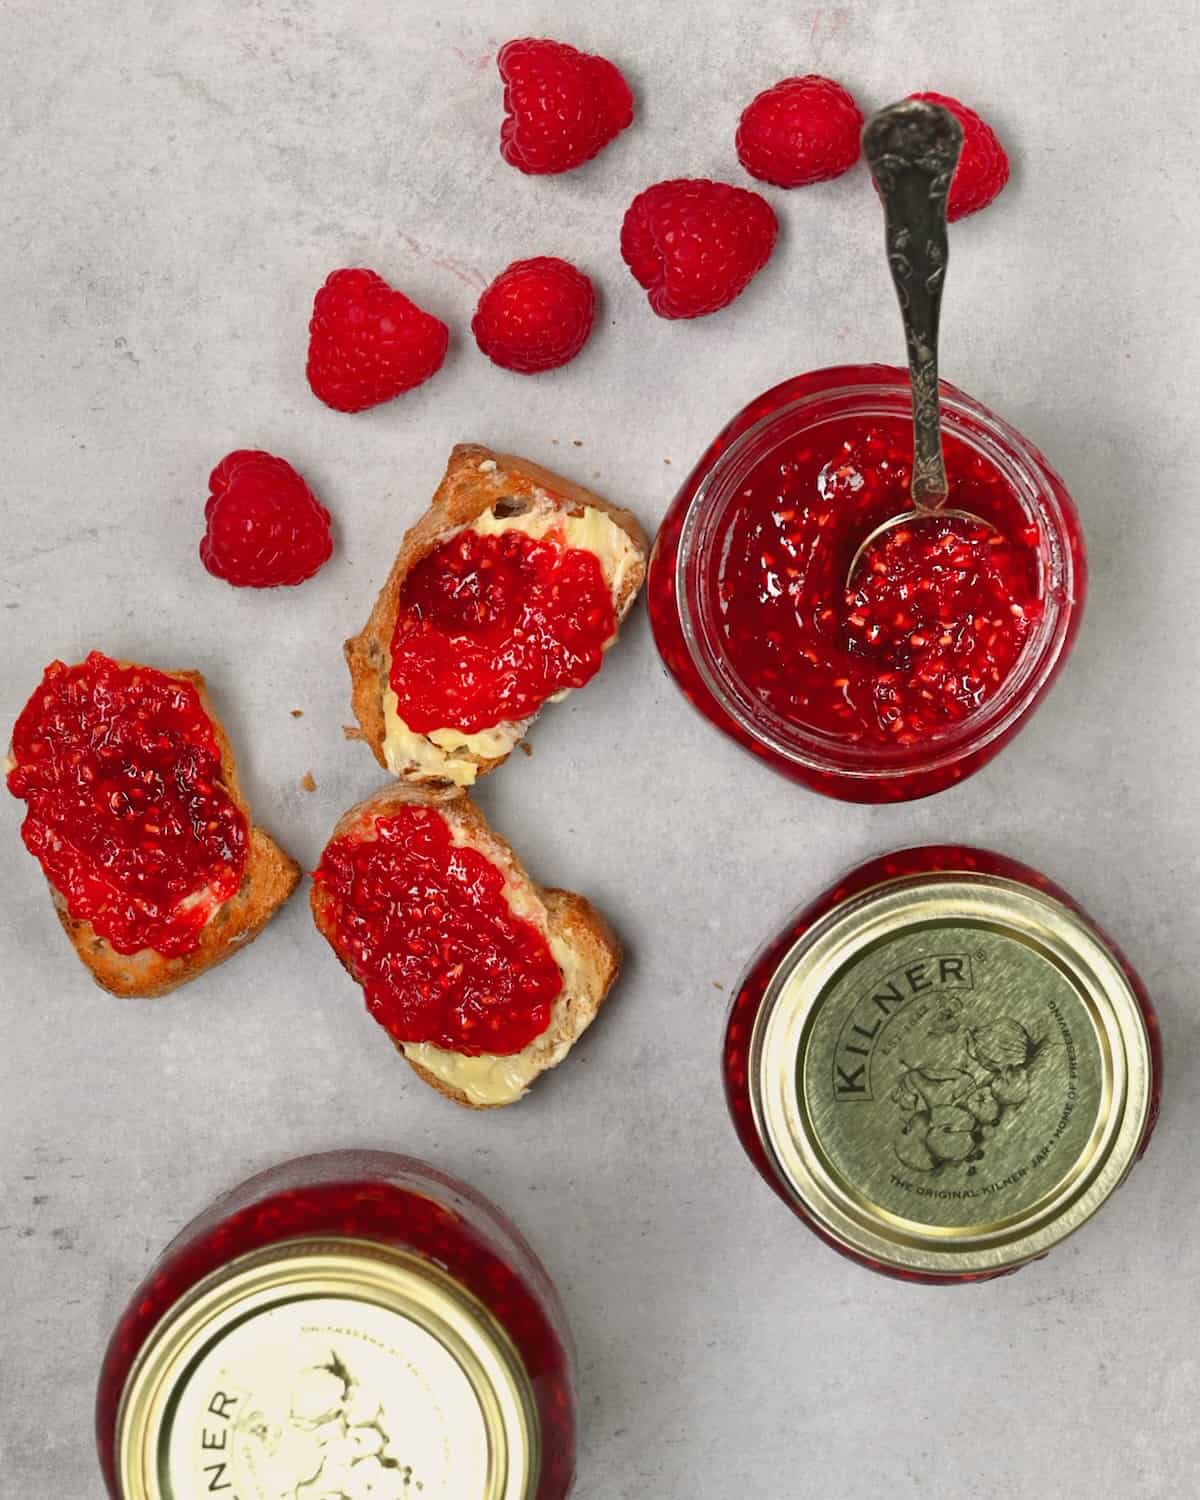 A jar of homemade raspberry jam and jam on bread